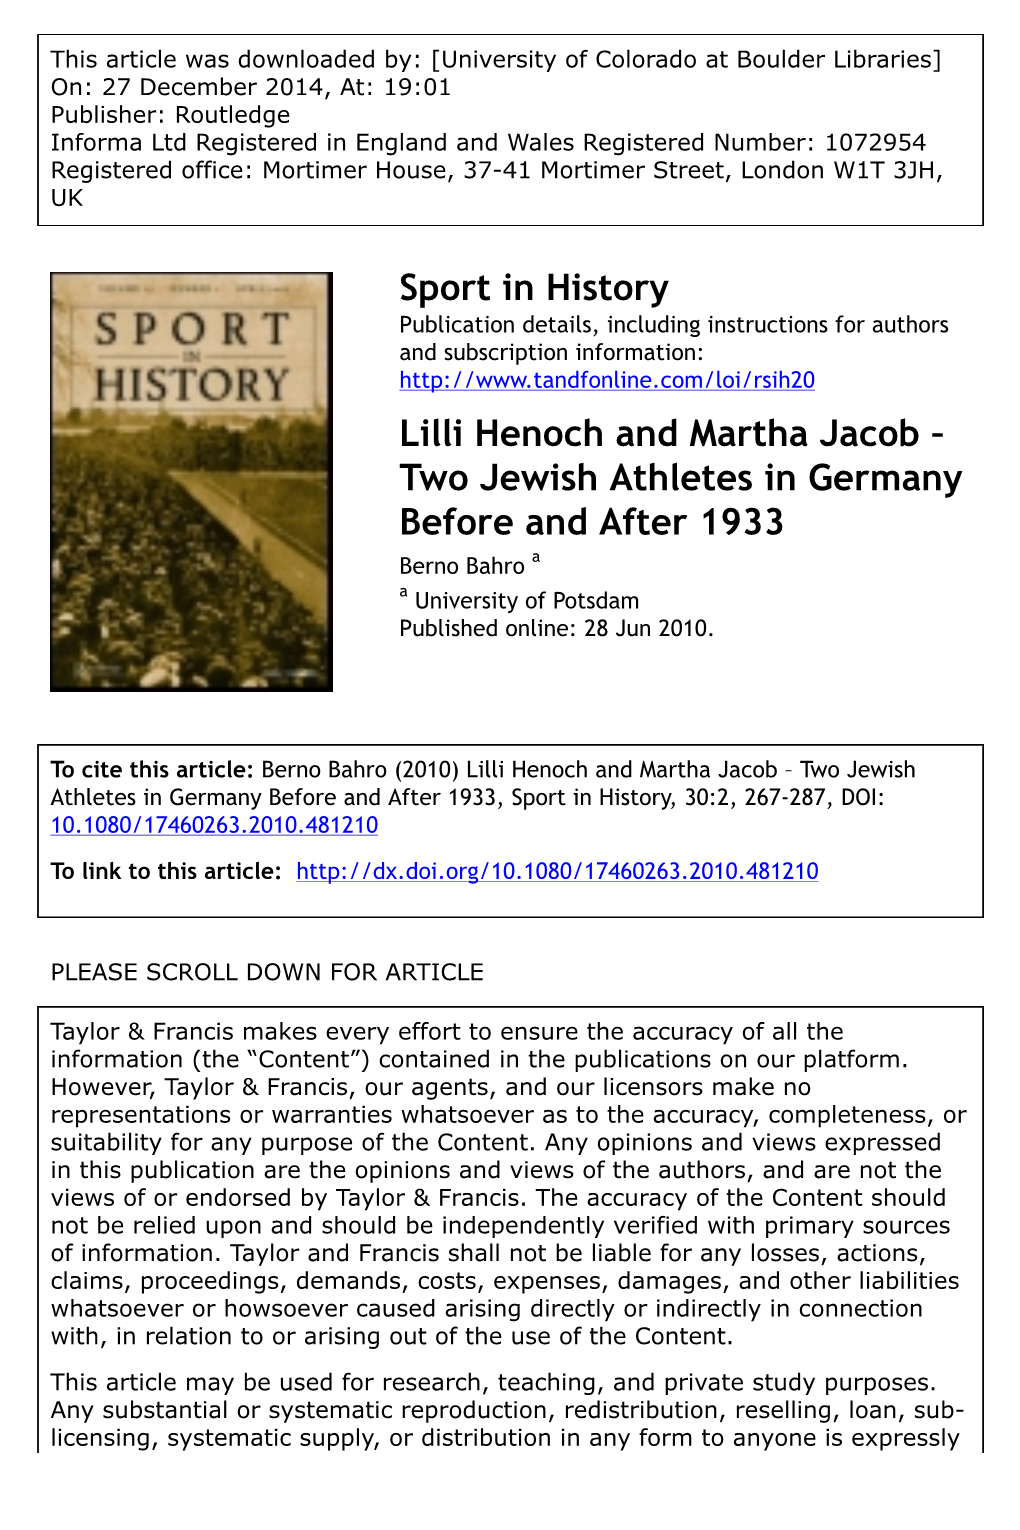 Lilli Henoch and Martha Jacob: Two Jewish Athletes In